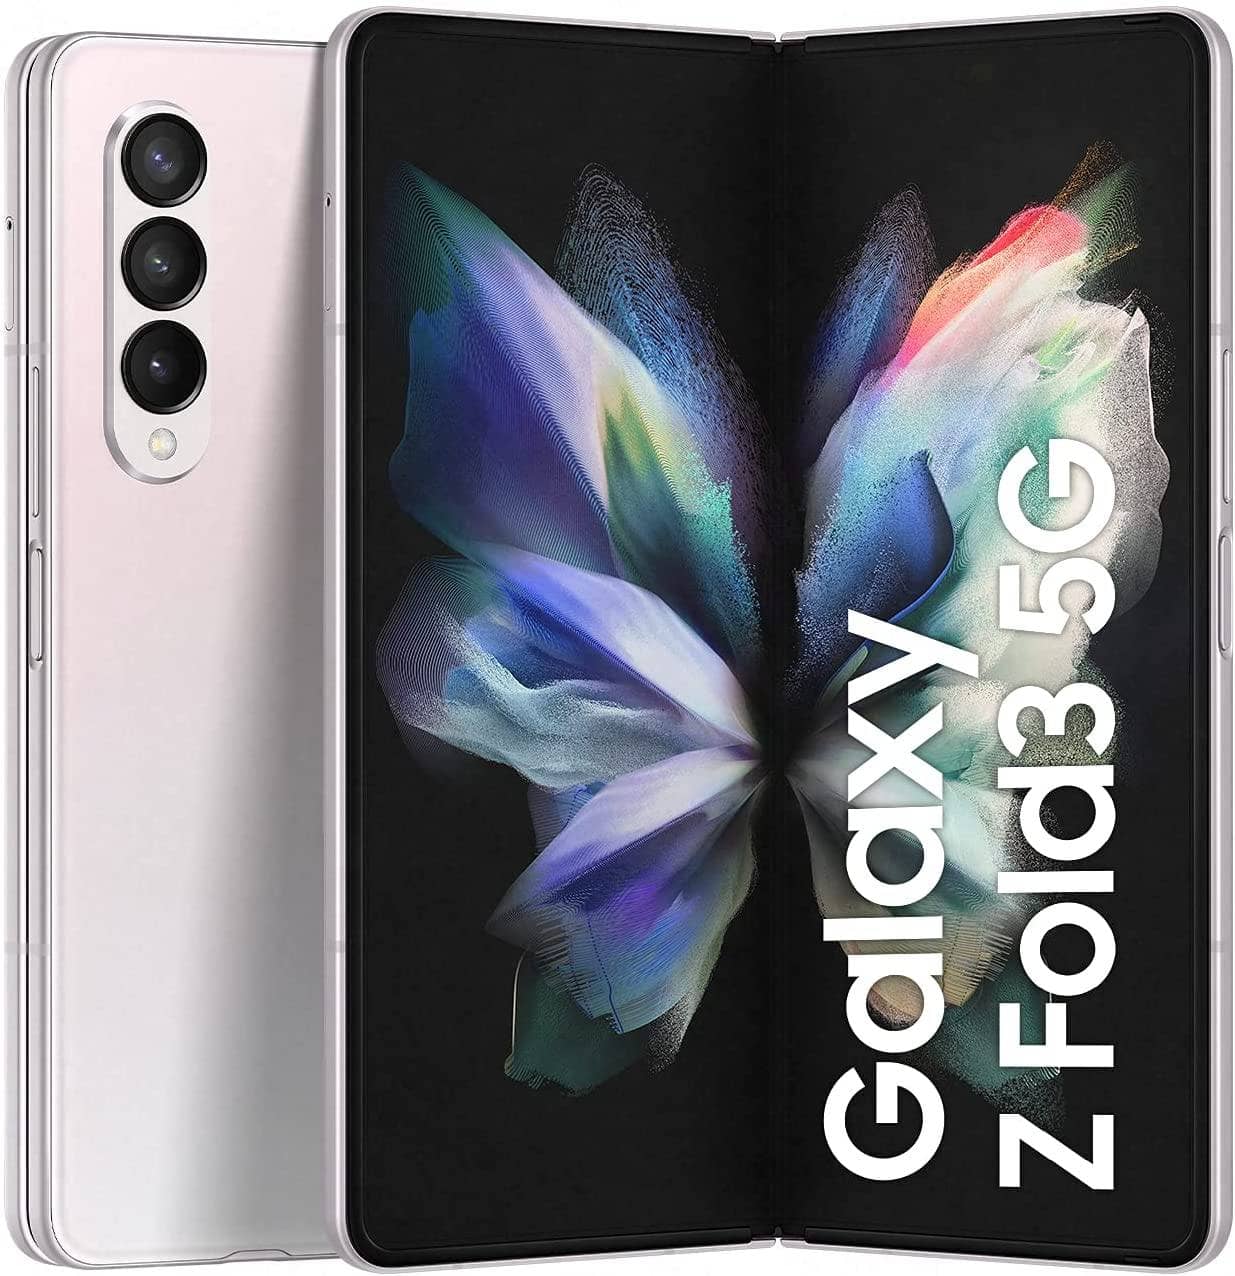 SAMSUNG Galaxy Z Fold 3 5G Single SIM and eSIM Smartphone - International version + 2 Years Warranty Included - DealYaSteal